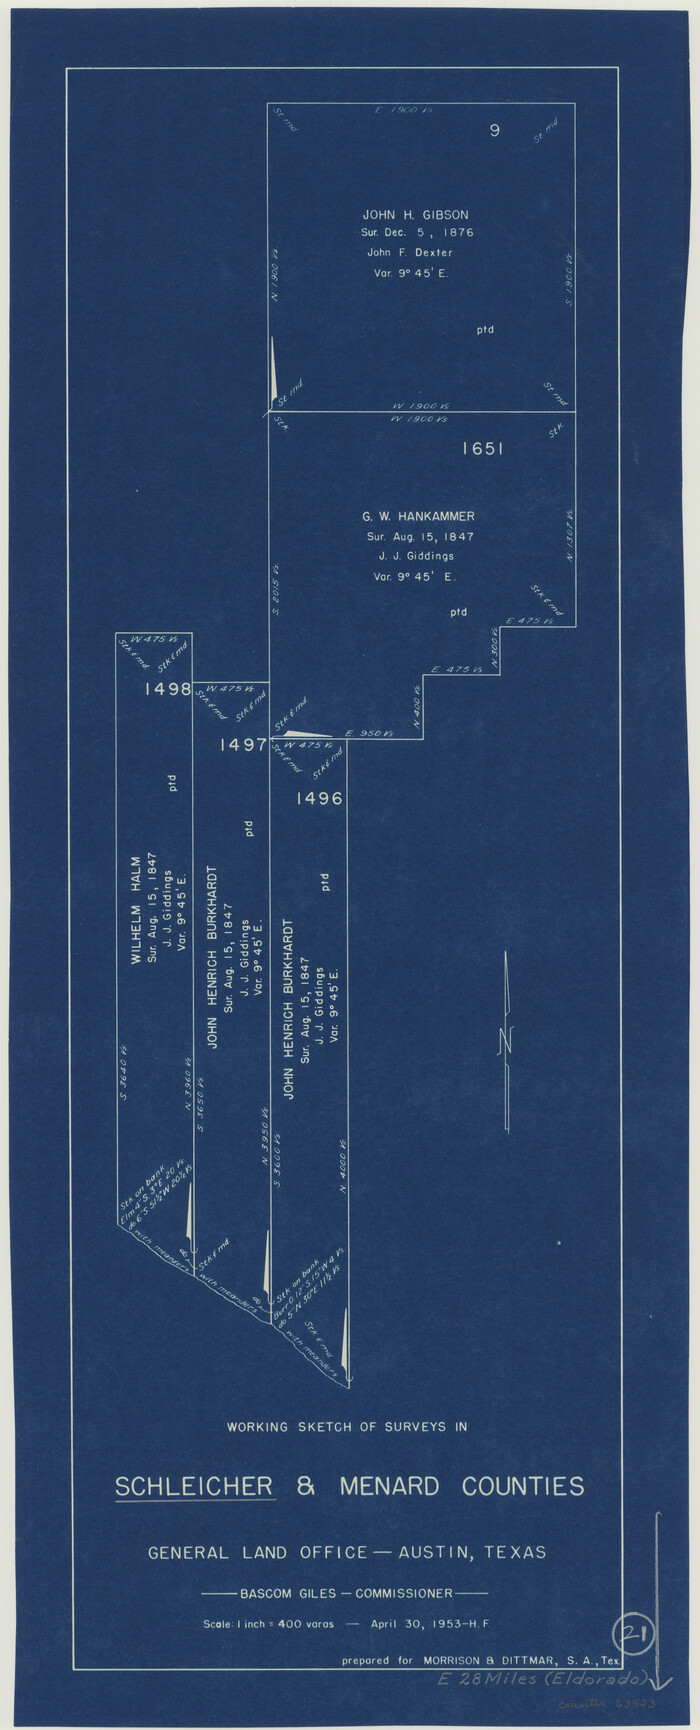 63823, Schleicher County Working Sketch 21, General Map Collection